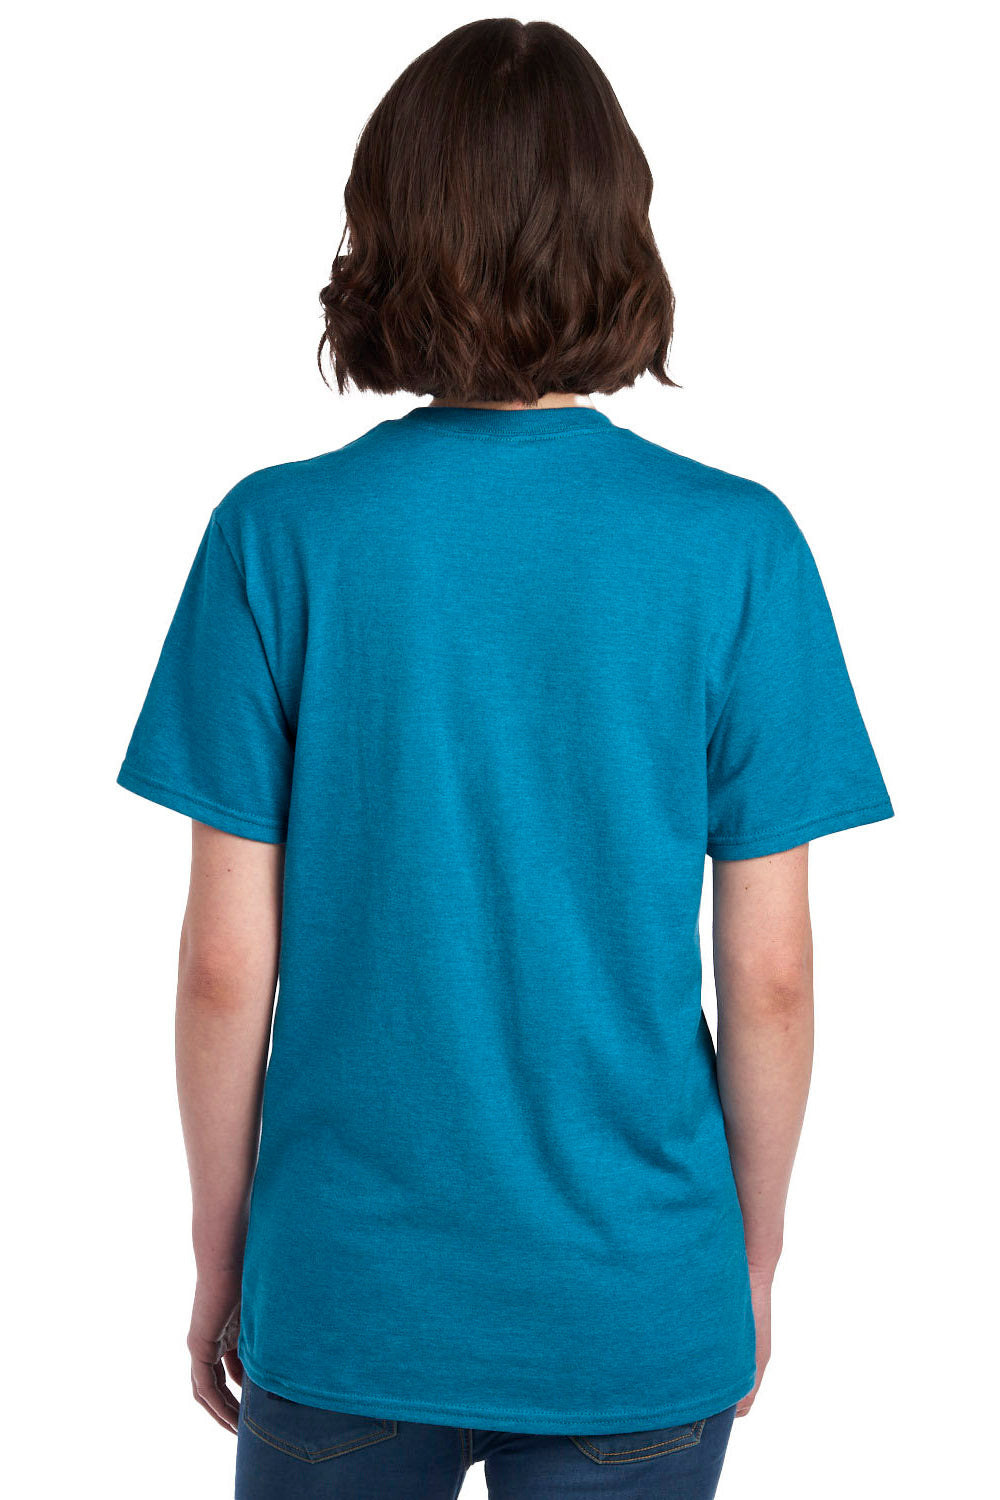 Jerzees 560MR/560M Mens Premium Blend Short Sleeve Crewneck T-Shirt Heather Digi Teal Blue Back